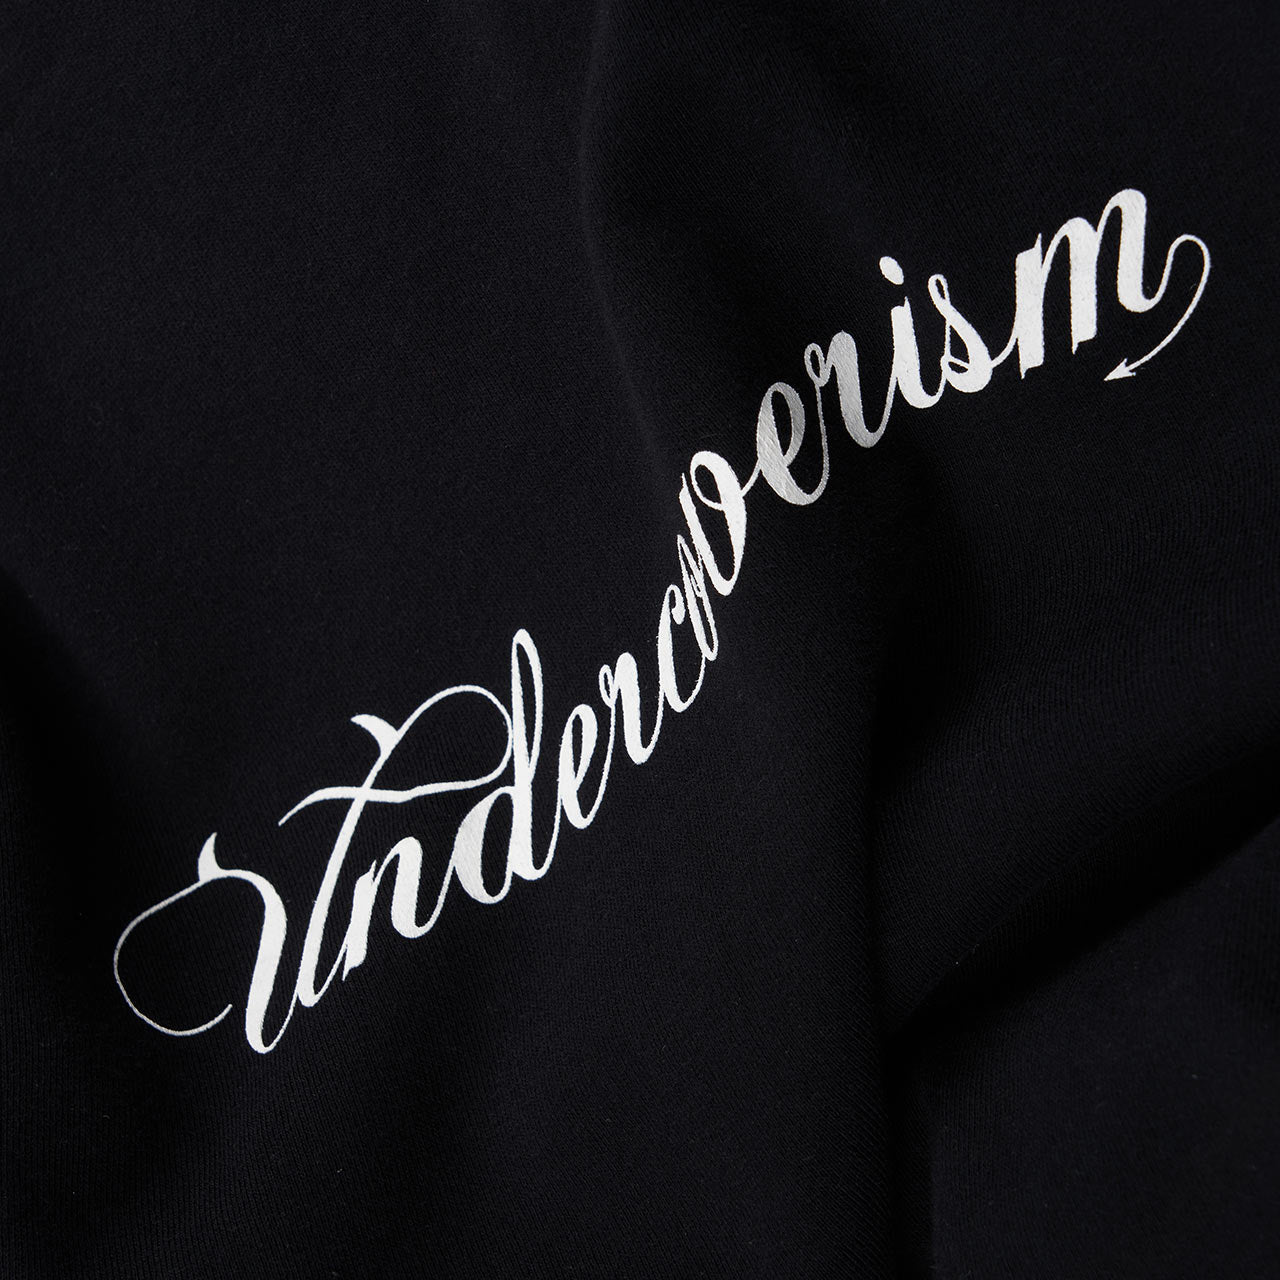 undercover undercover logo sweatshirt (black)